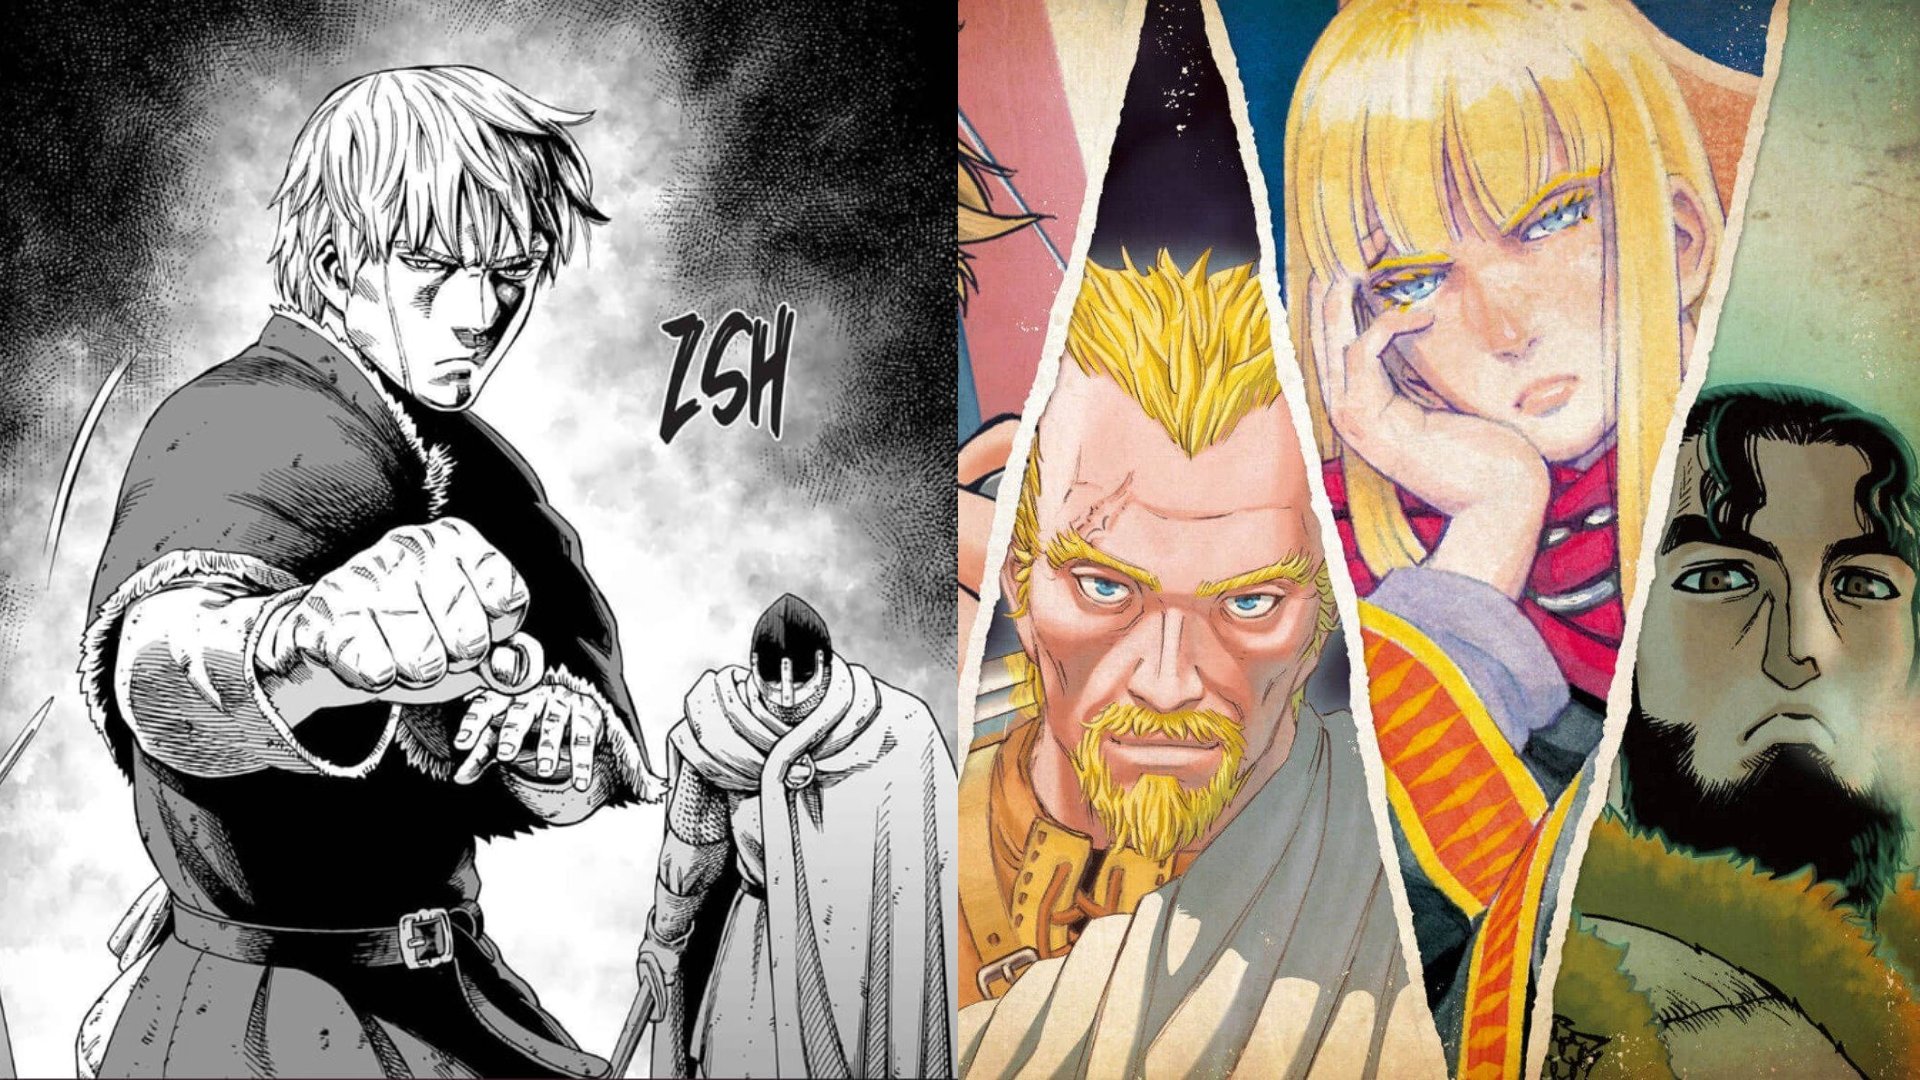 Vinland Saga season 2: Story arcs and manga timeline explained